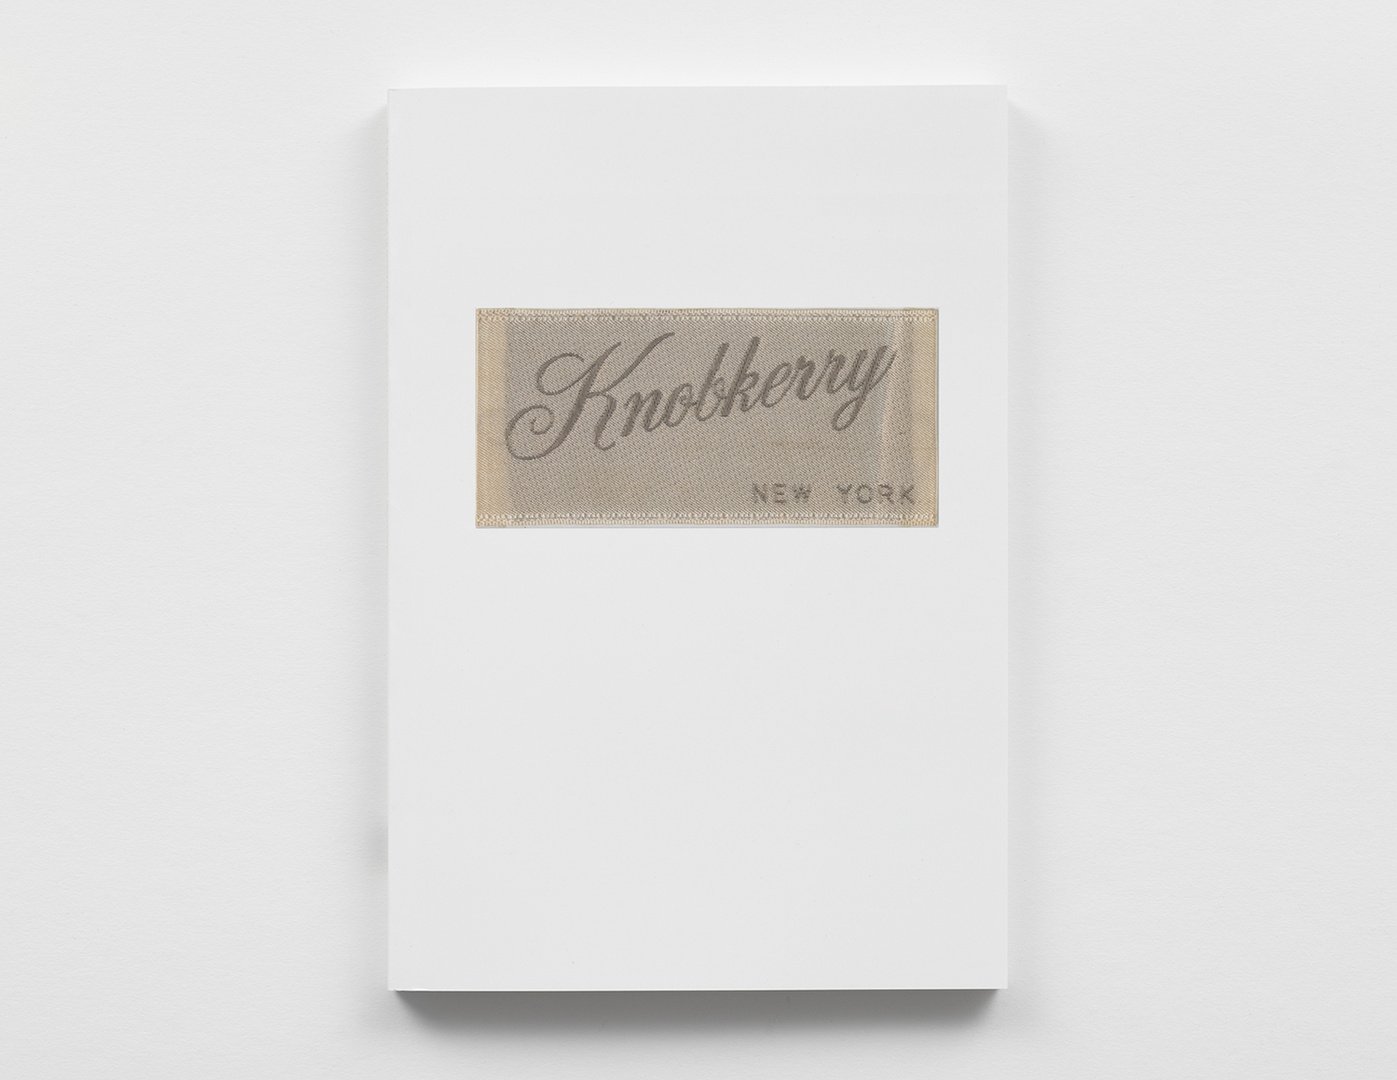 Sara Penn's Knobkerry: An Oral History Sourcebook